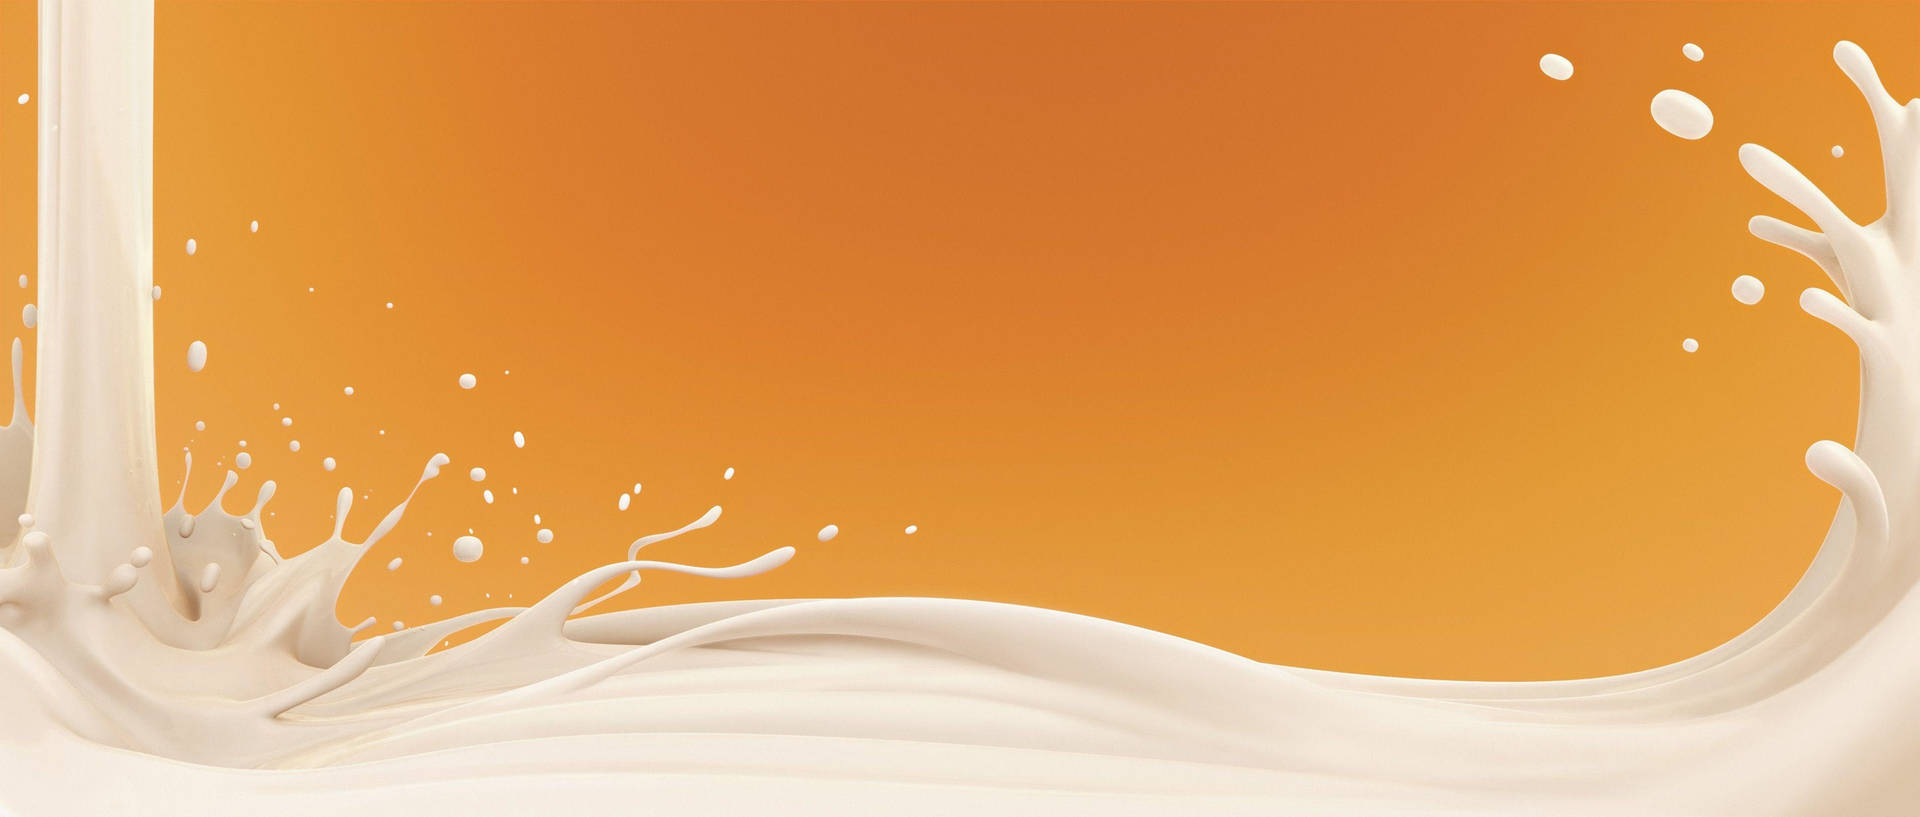 Splashing Milk Liquid Branding Design Background